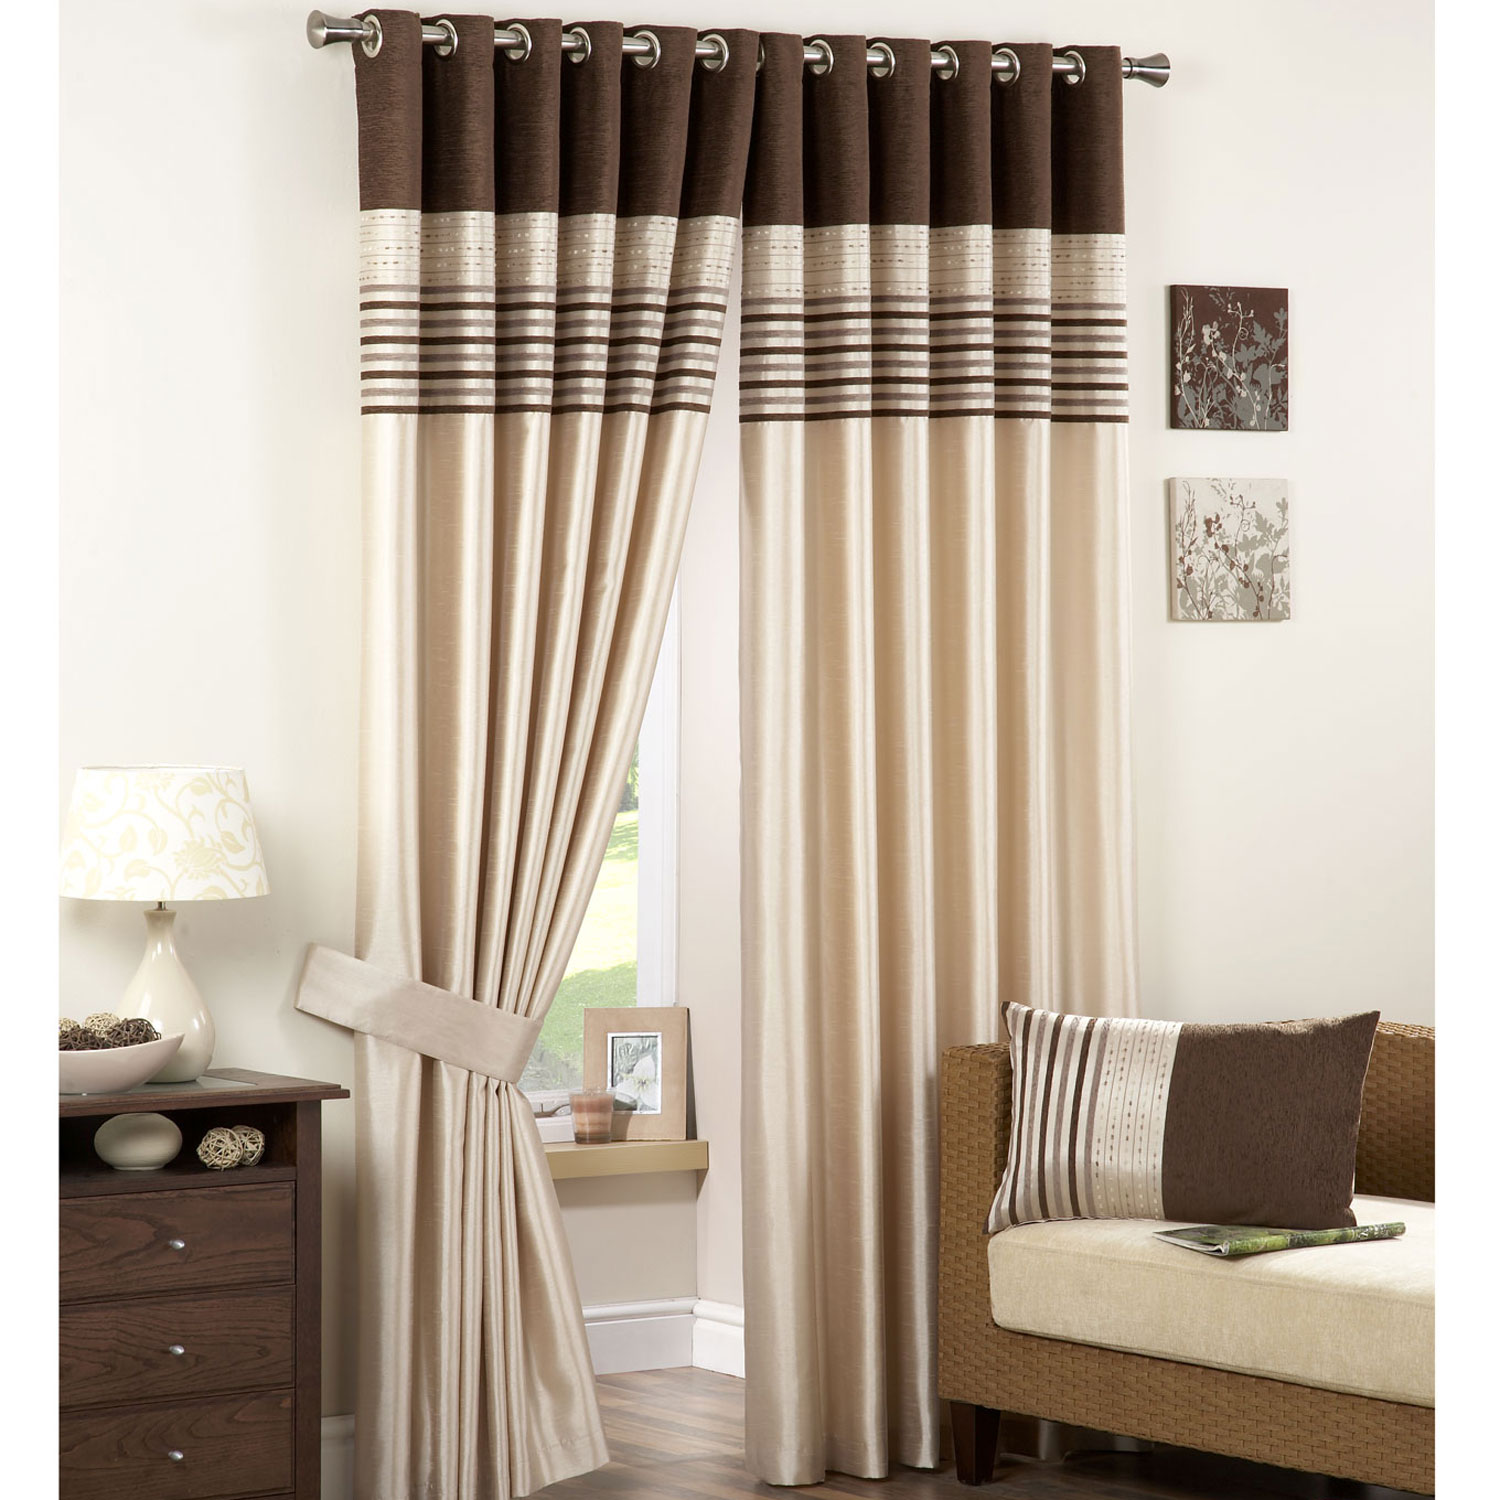 Natural curtains : Furniture Ideas | DeltaAngelGroup